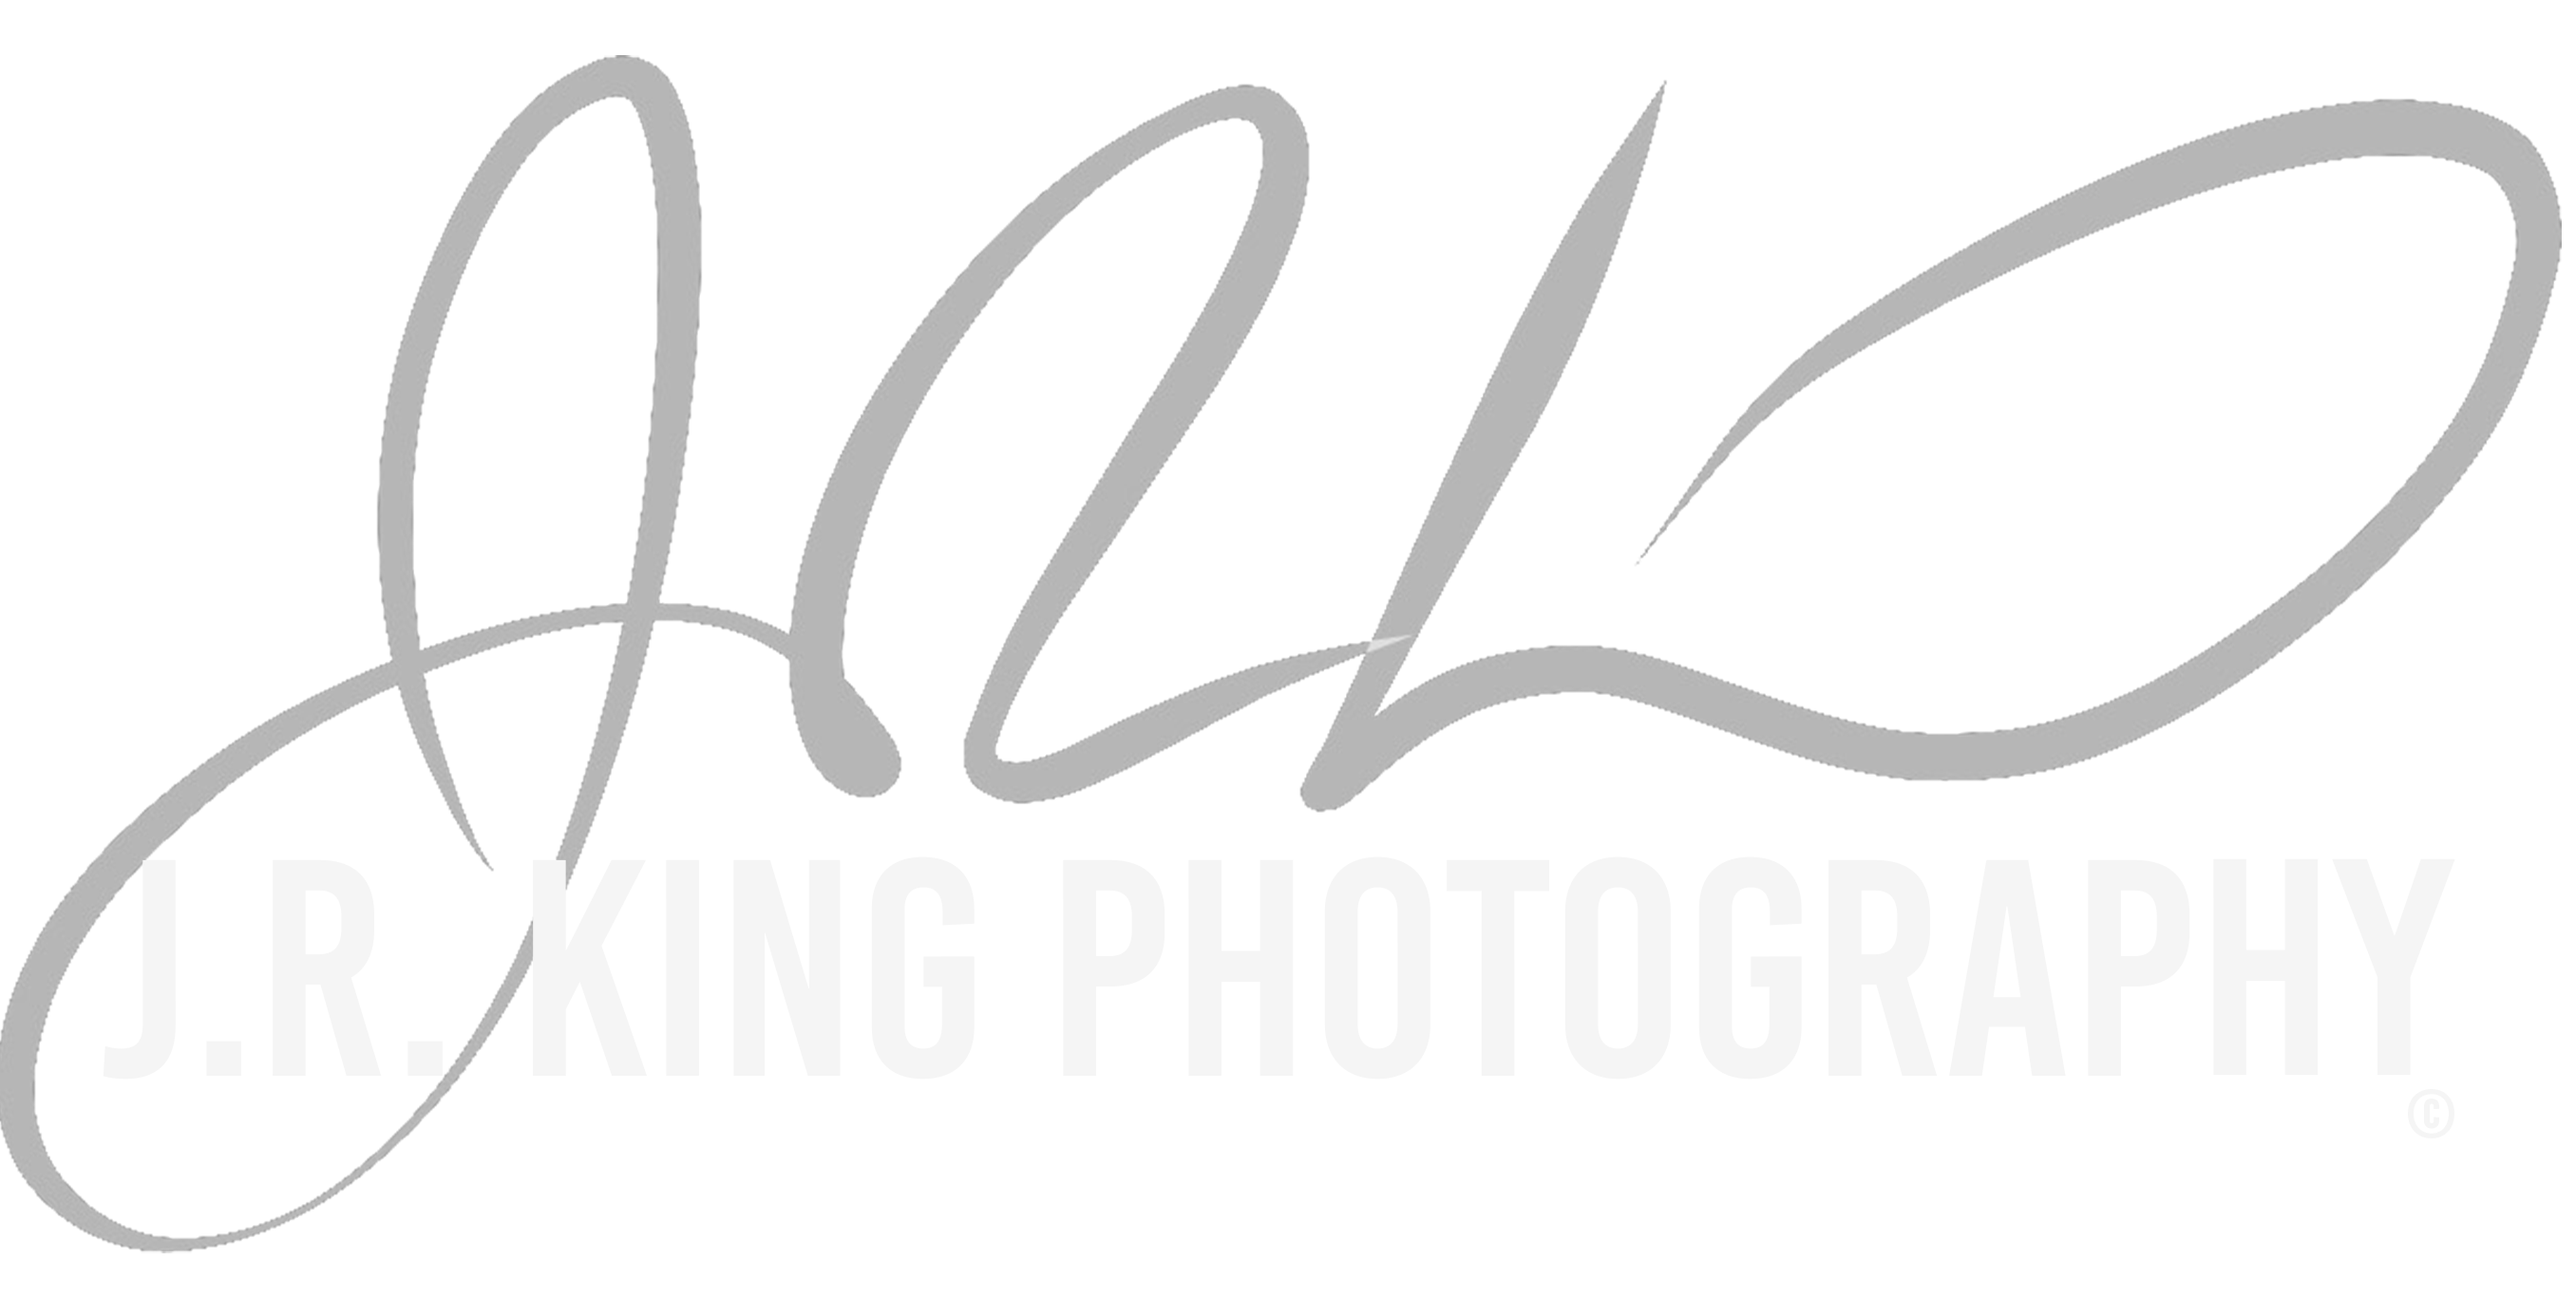 J.R. KING PHOTOGRAPHY